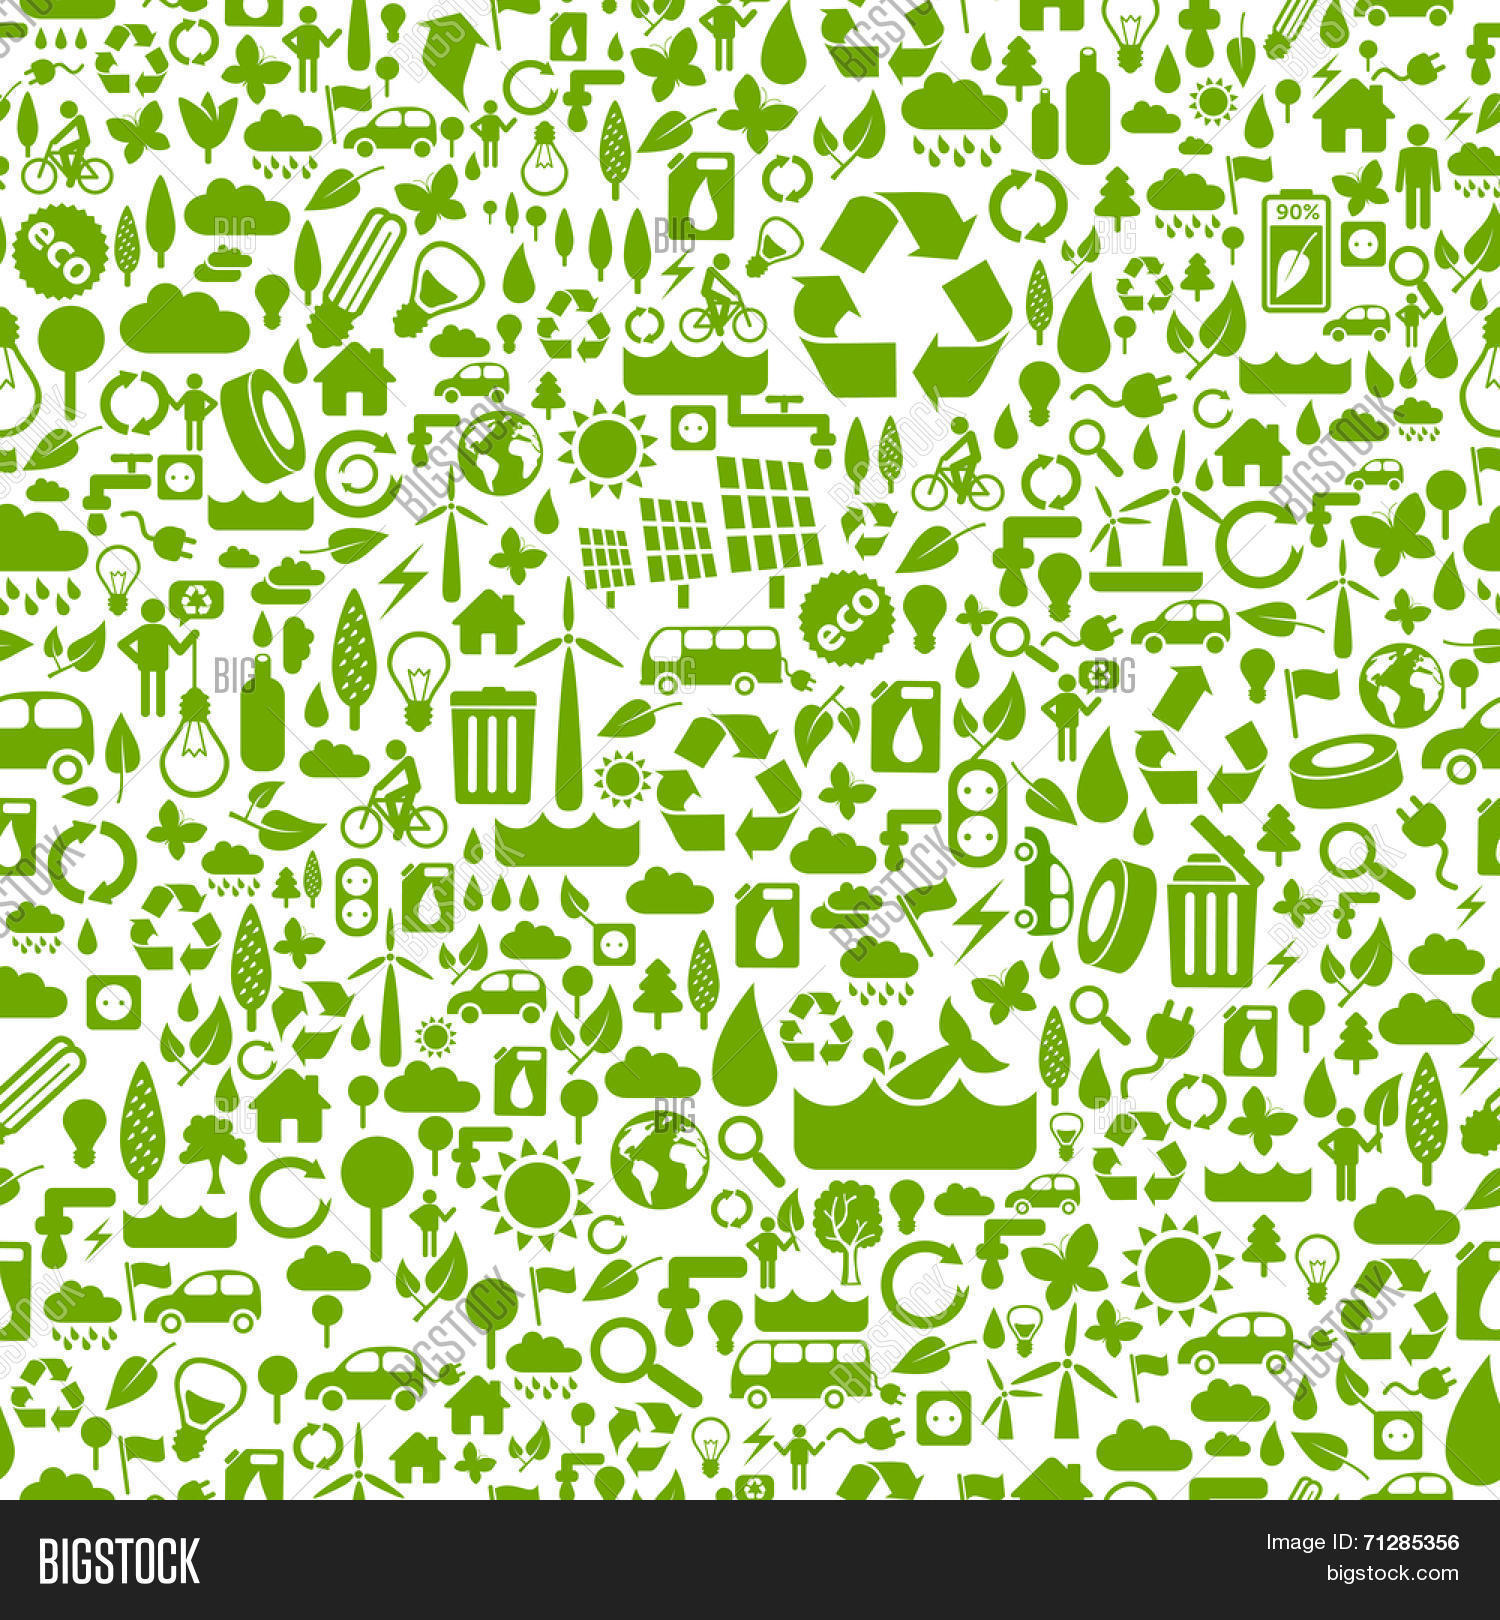 Green Eco Background Made Small Vector & Photo | Bigstock